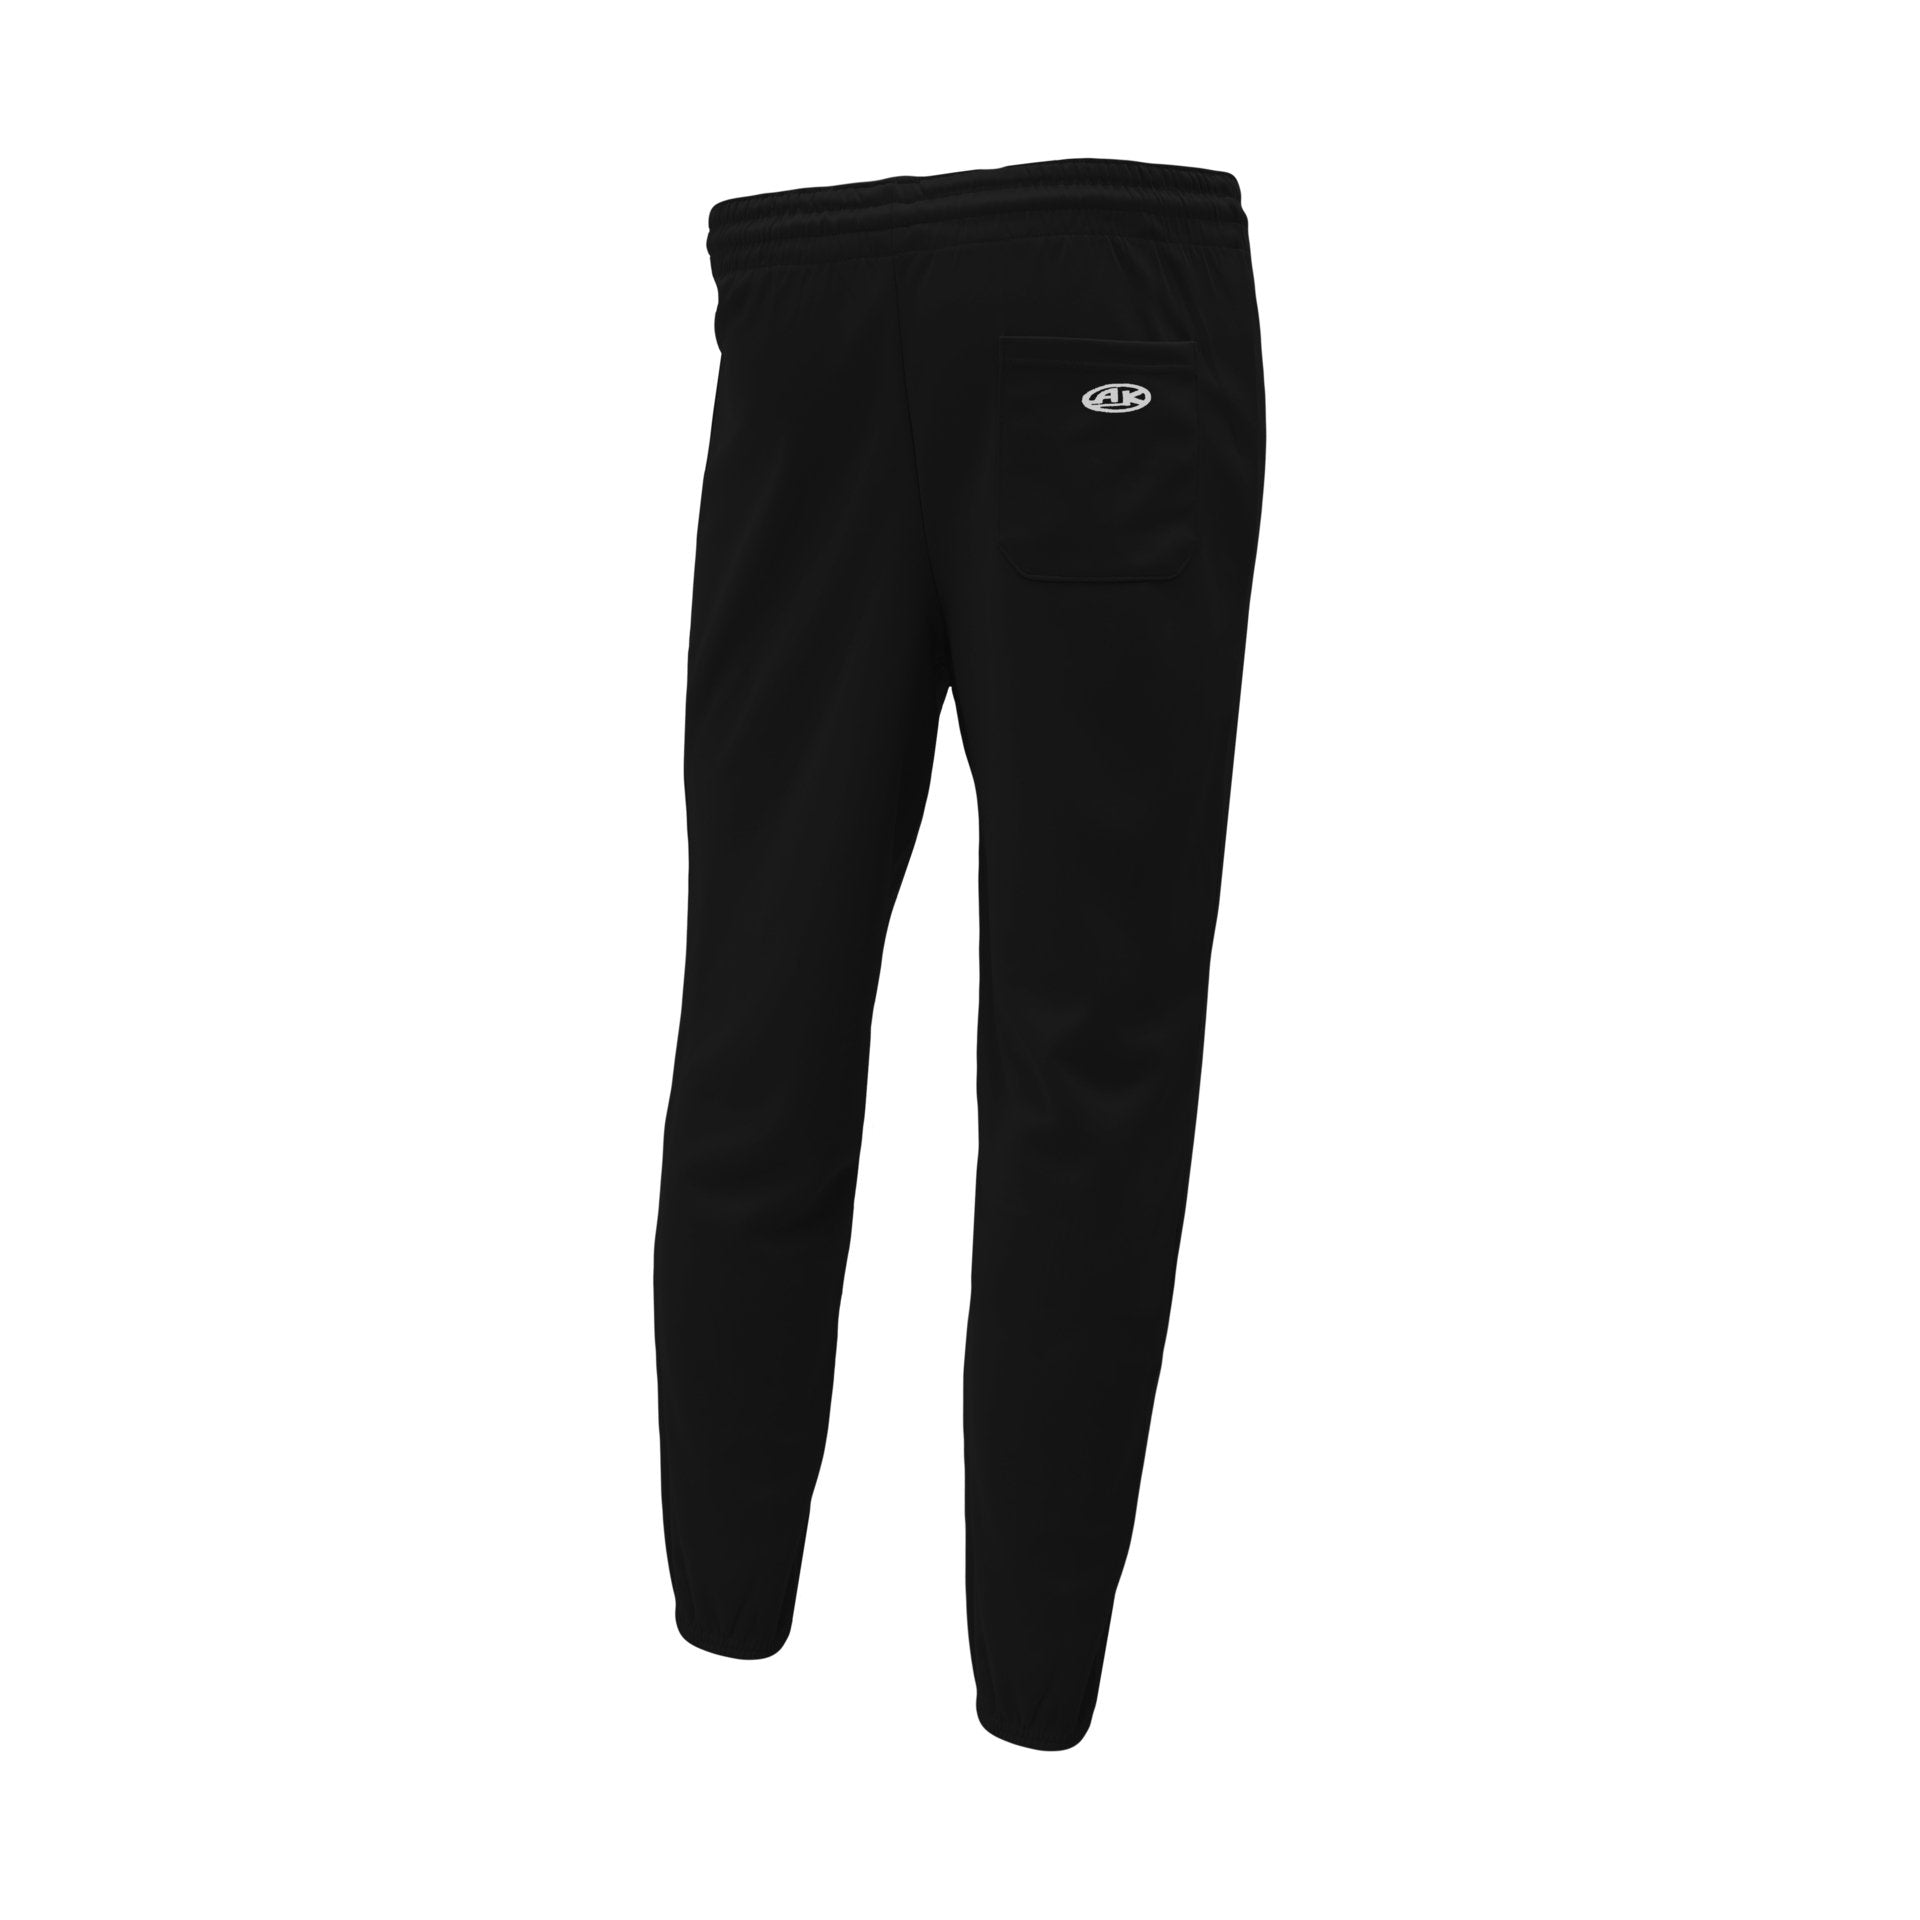 Premium Baseball Pants, Drawstring, Elastic Bottom, Black, ba1371-001, back